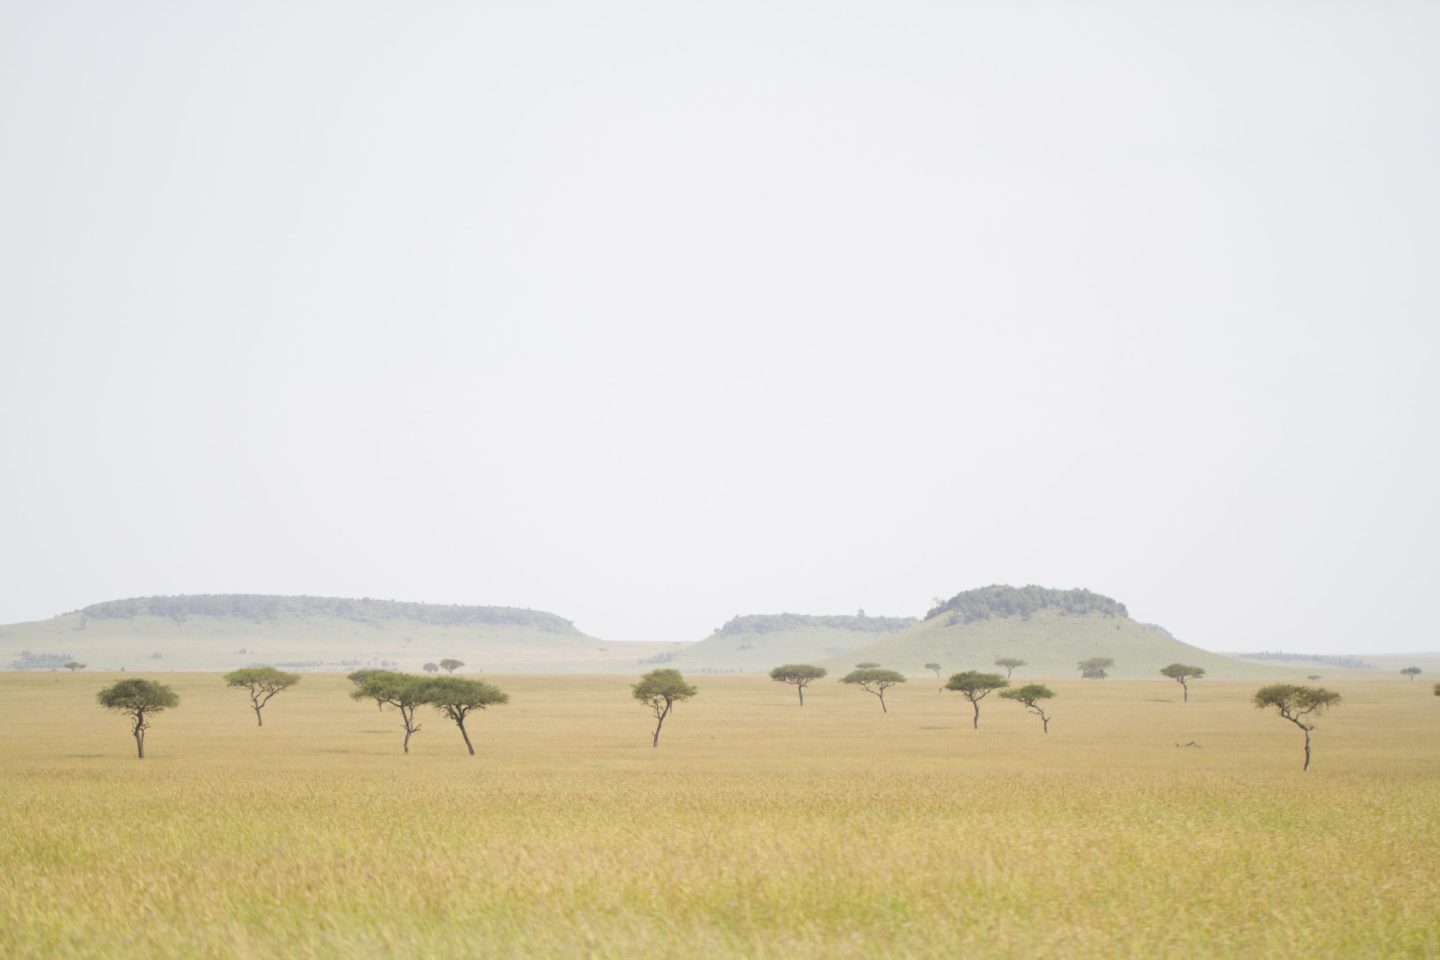 Serengeti. Image Credit: Nomad